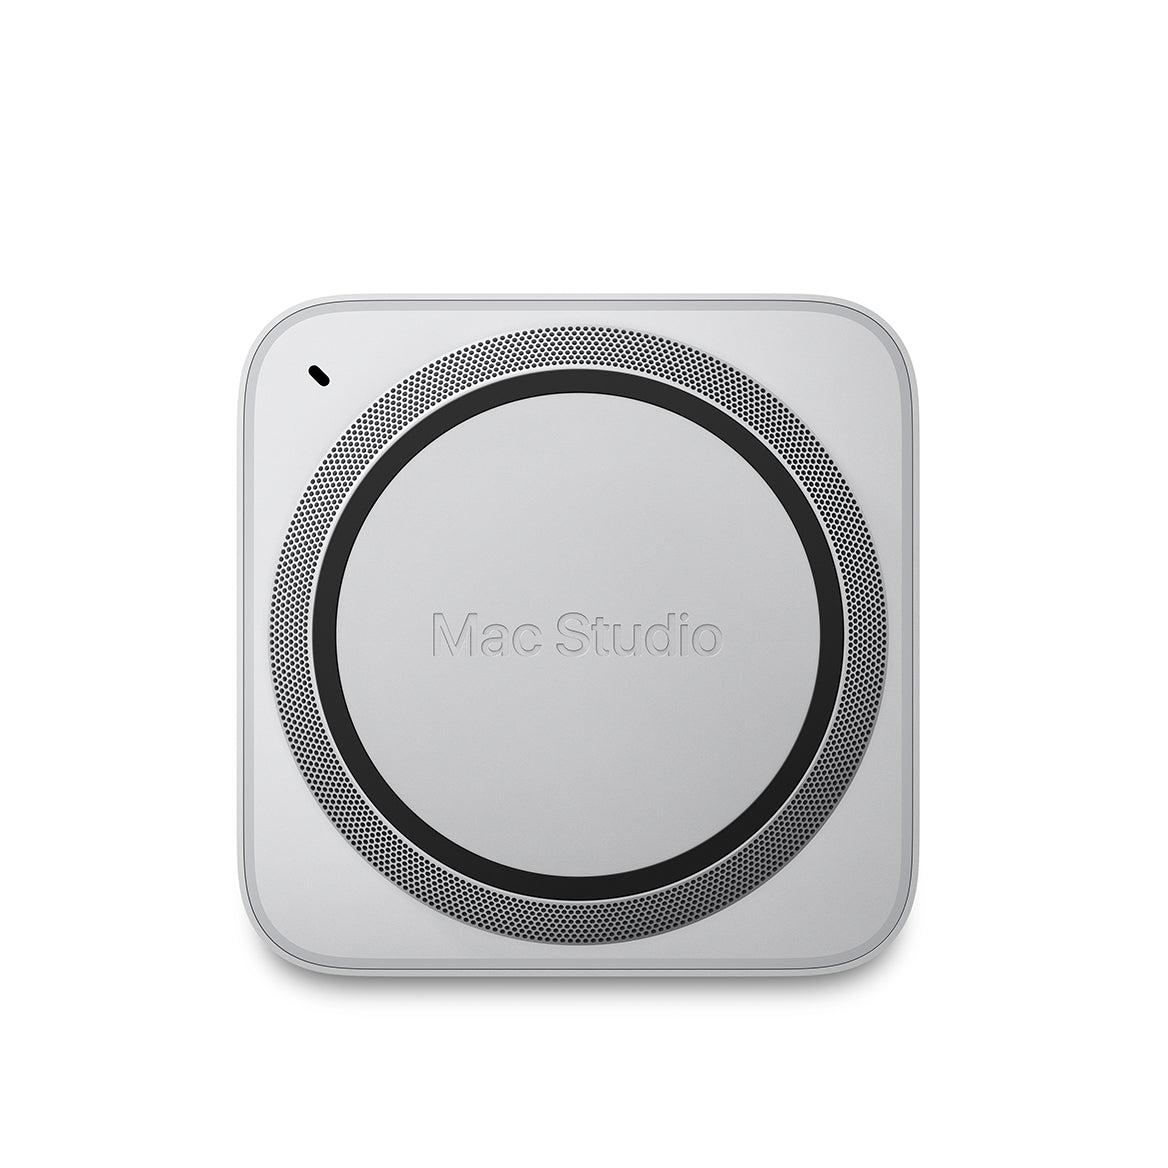 Mac Studio: Apple M1 Max chip with 10‑core CPU and 24‑core GPU, 512GB SSD (2022)